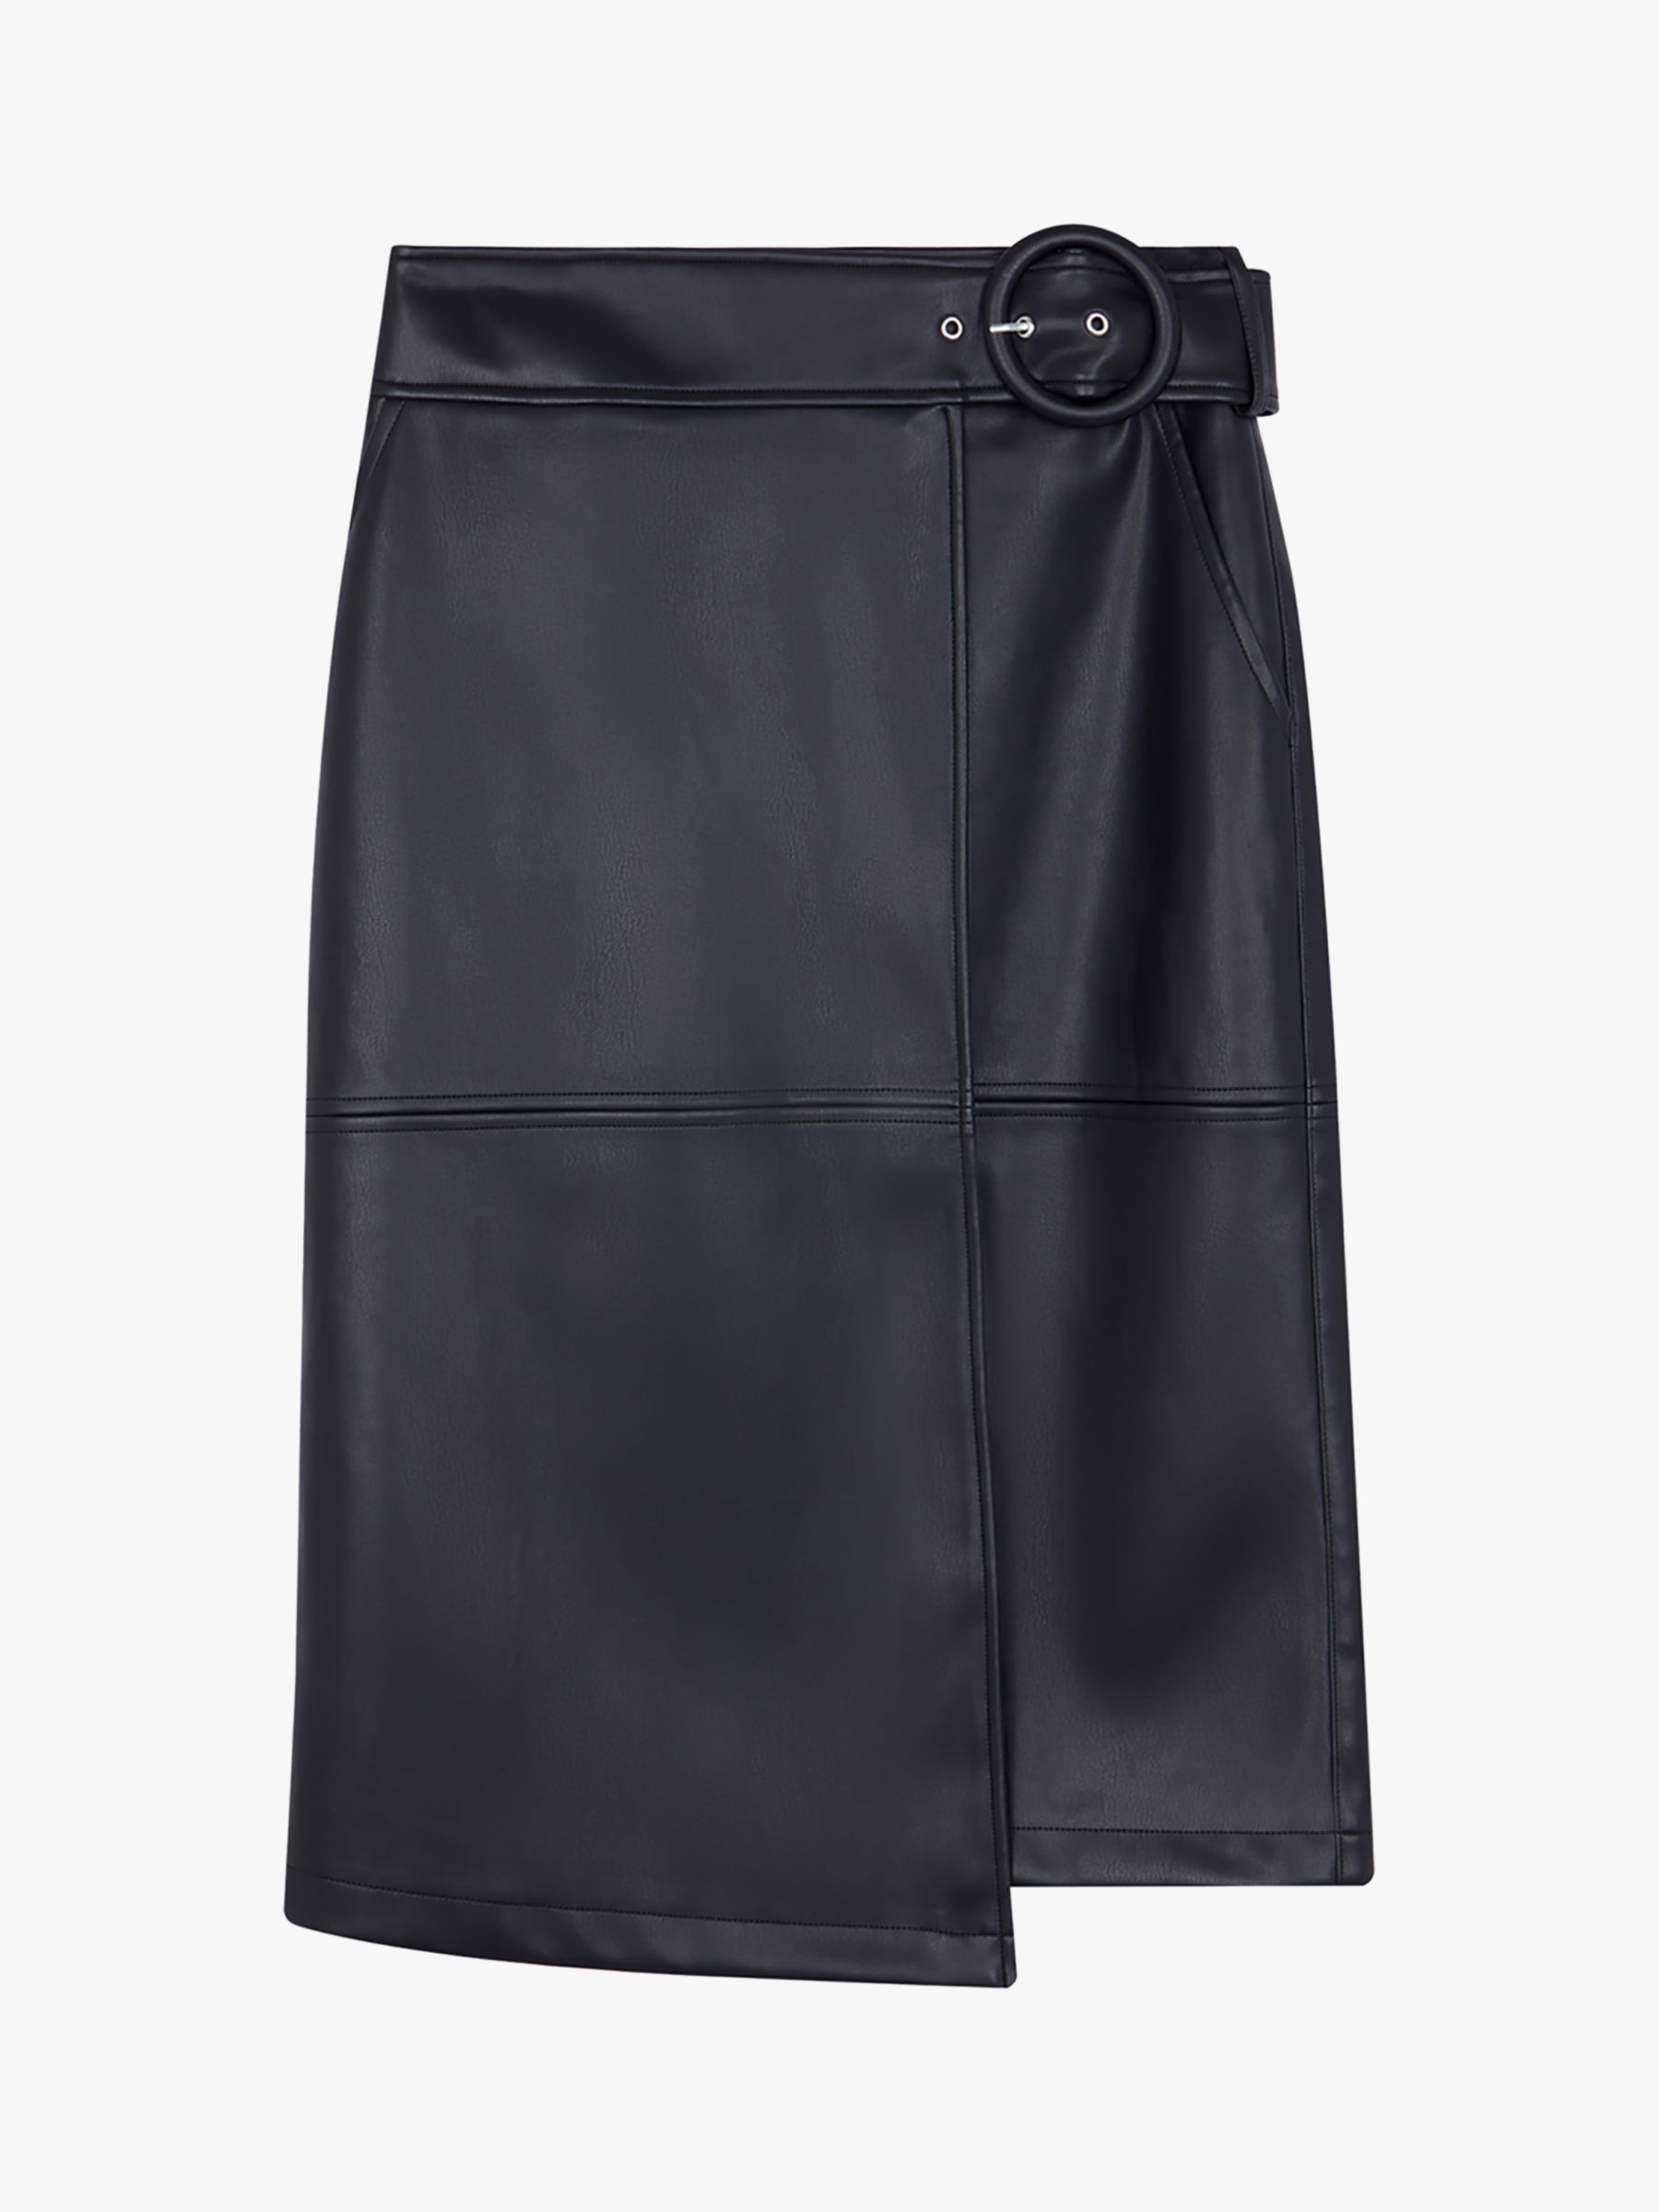 Warehouse Faux Leather A-Line Midi Skirt, Black